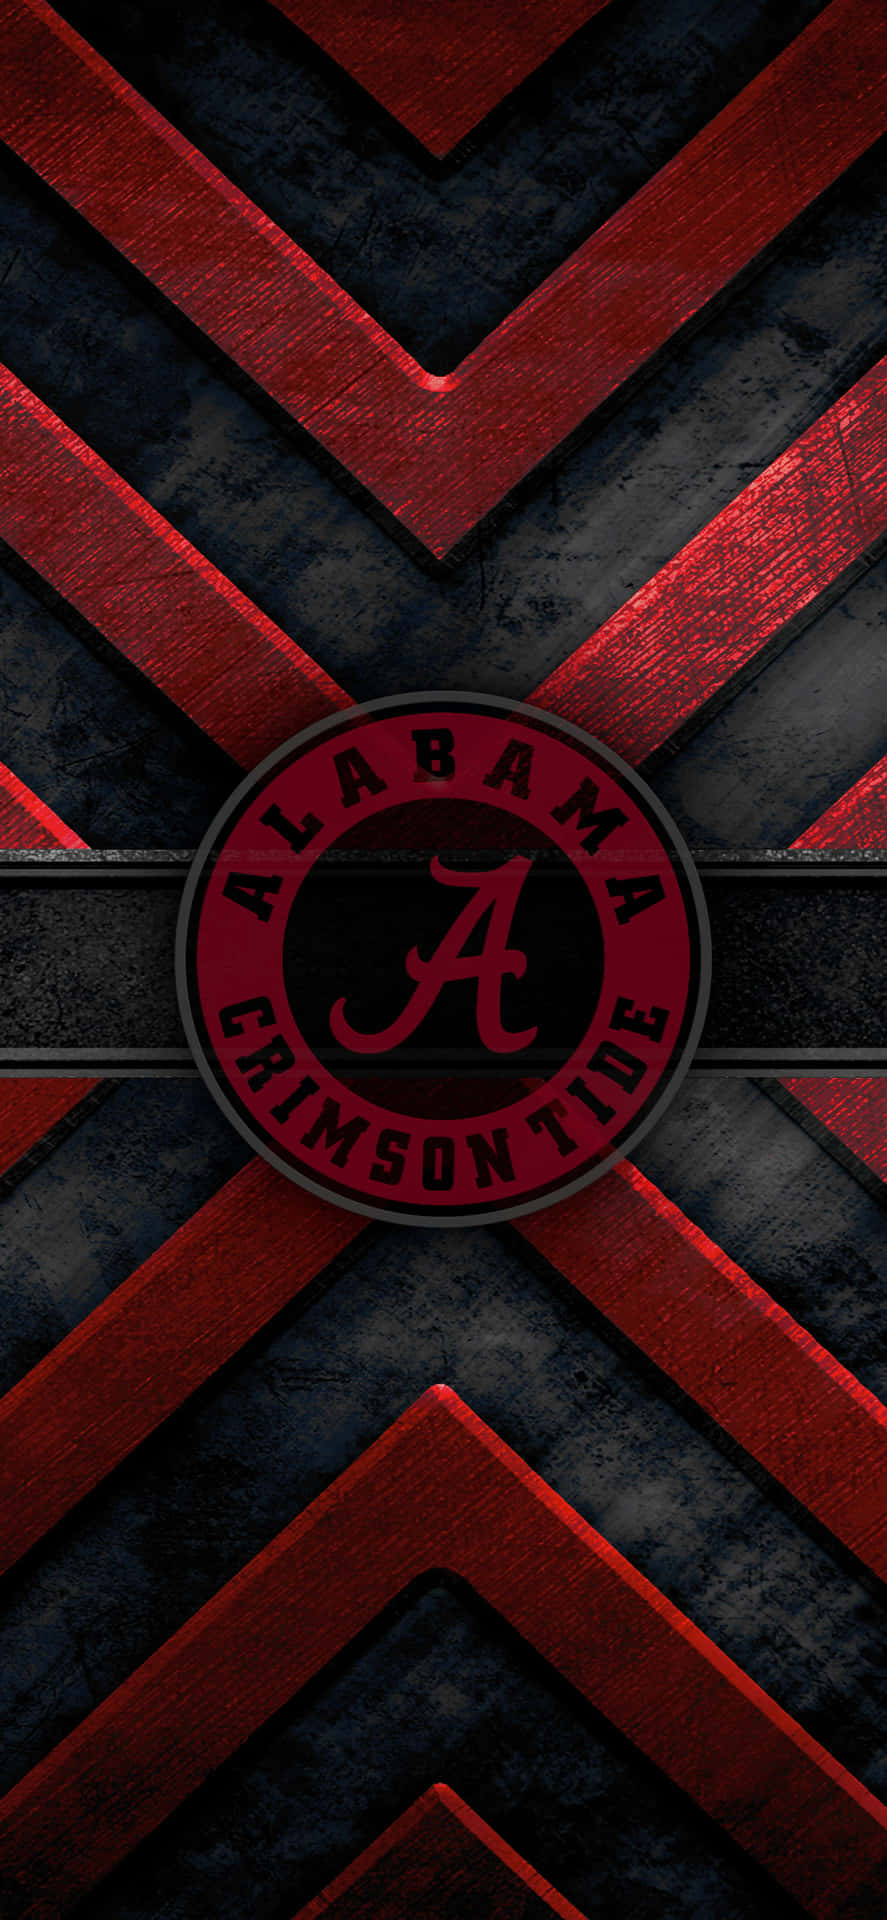 100+] Alabama Football Logo Wallpapers | Wallpapers.com